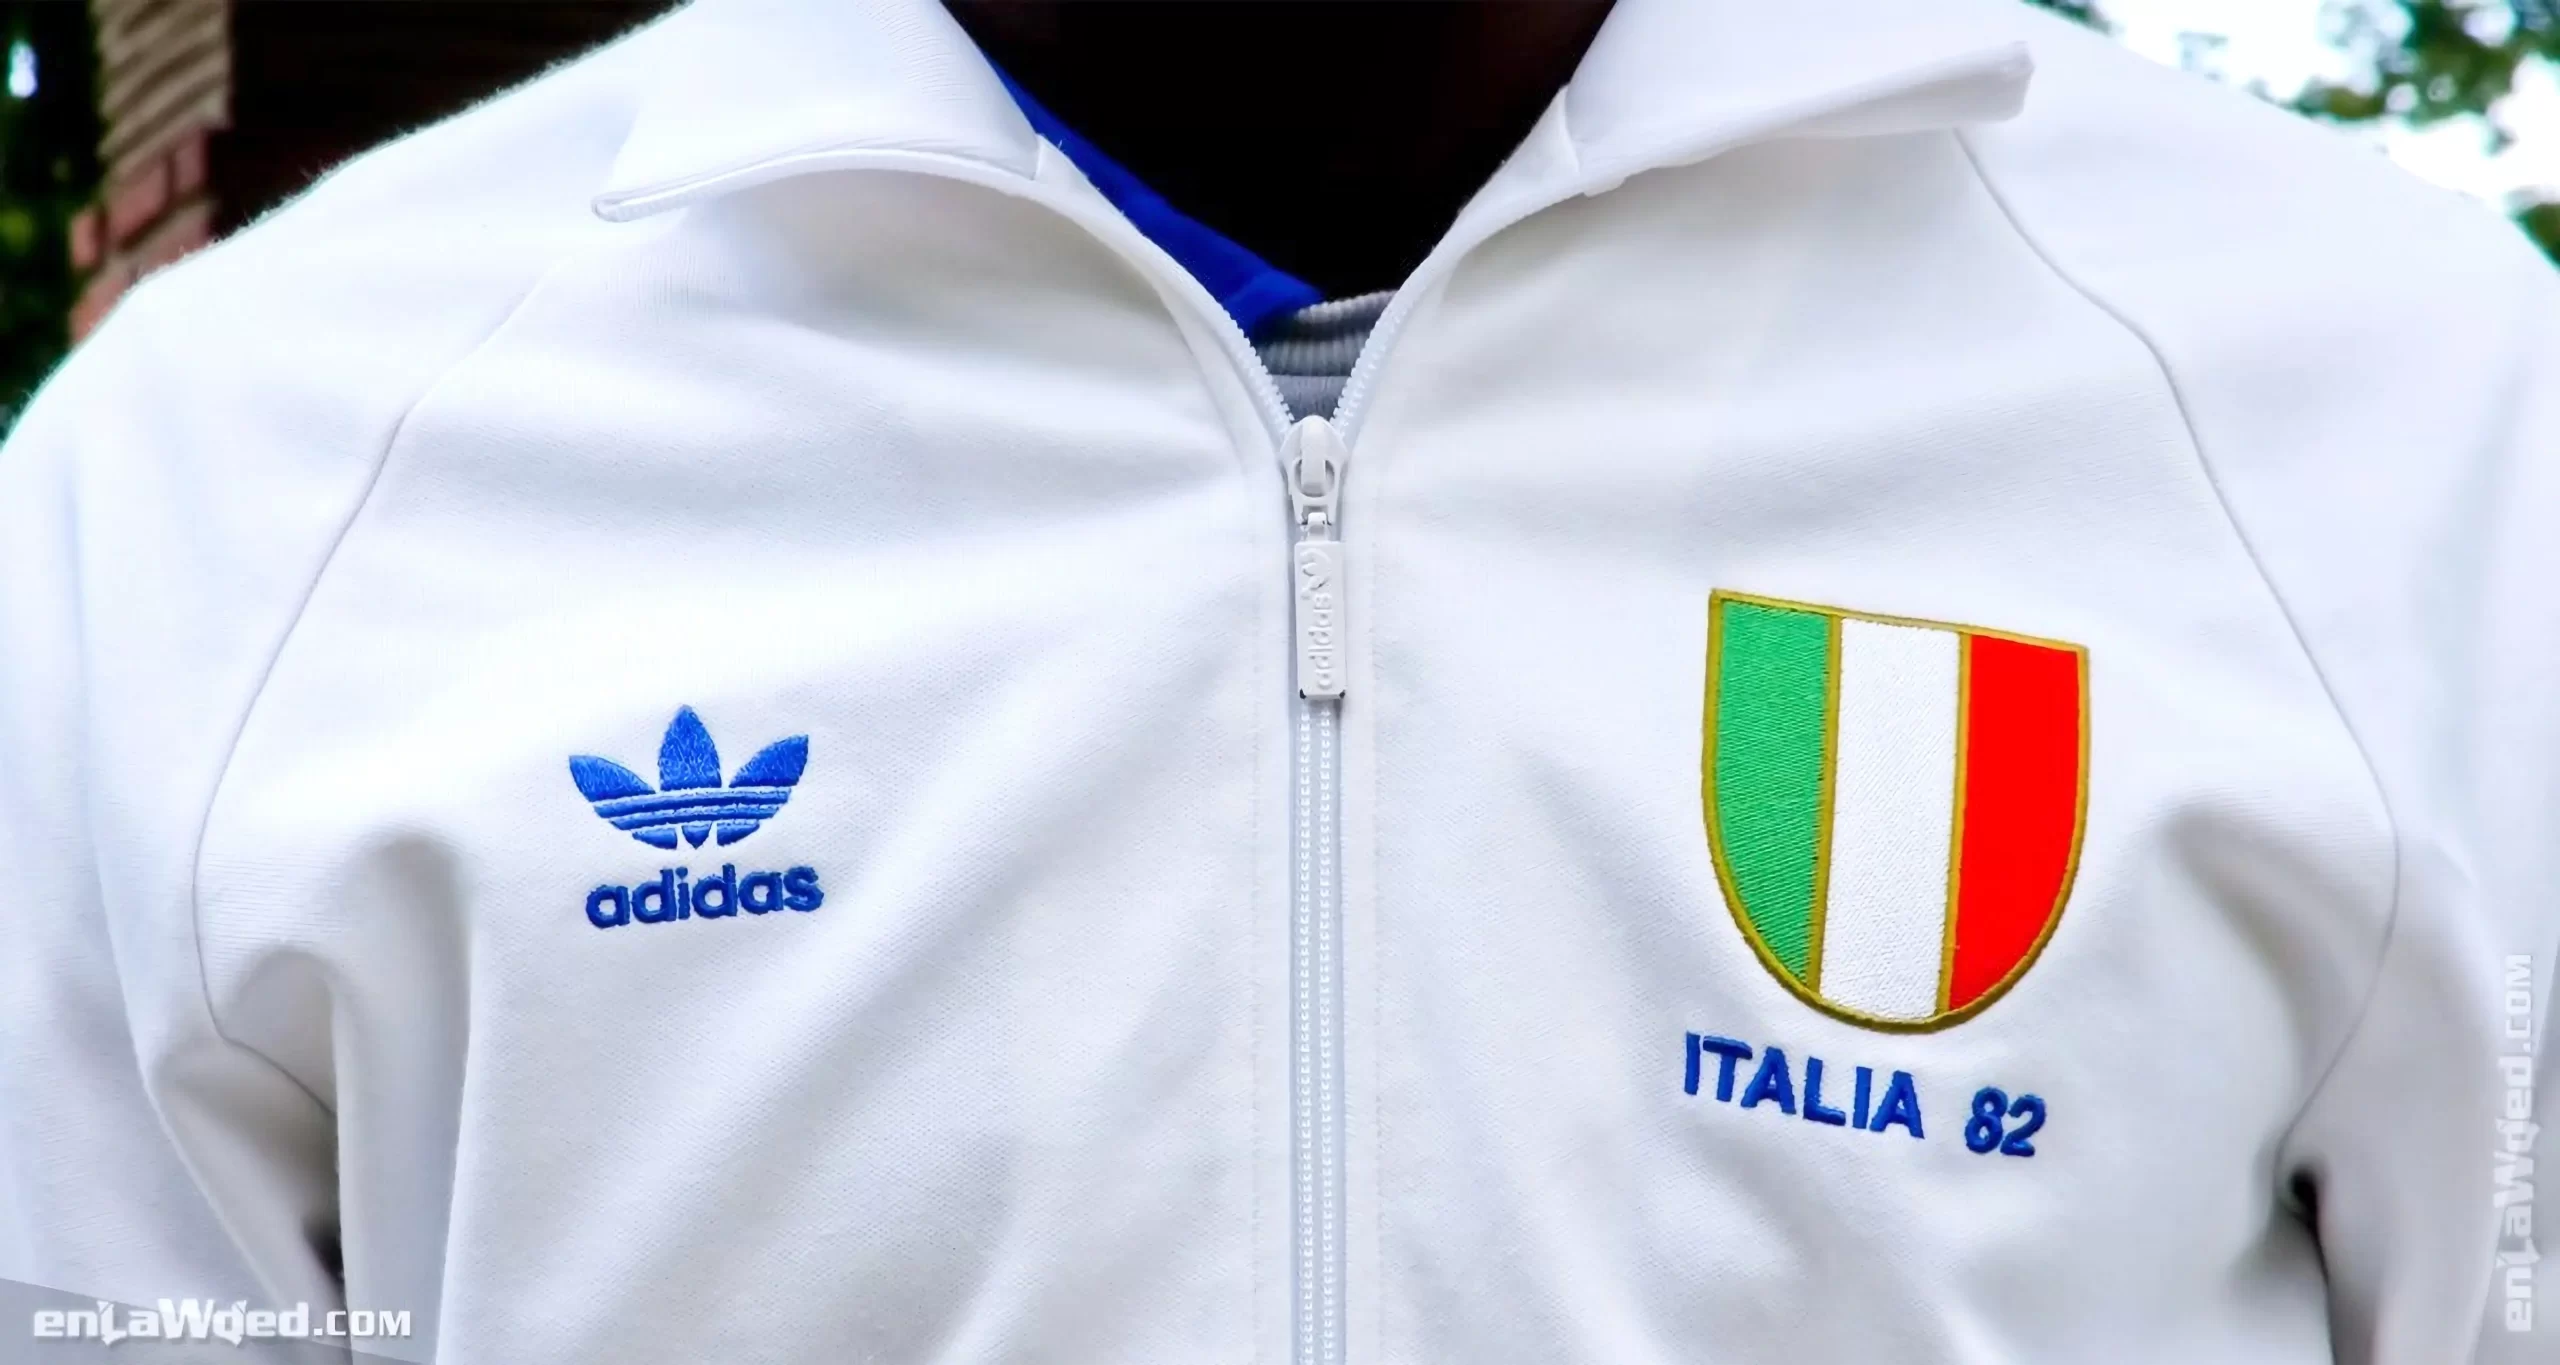 Men’s 2006 Italia ’82 Forza Azzurri TT by Adidas Originals: Complete (EnLawded.com file #lmc44pdolkqe5ru1hph)